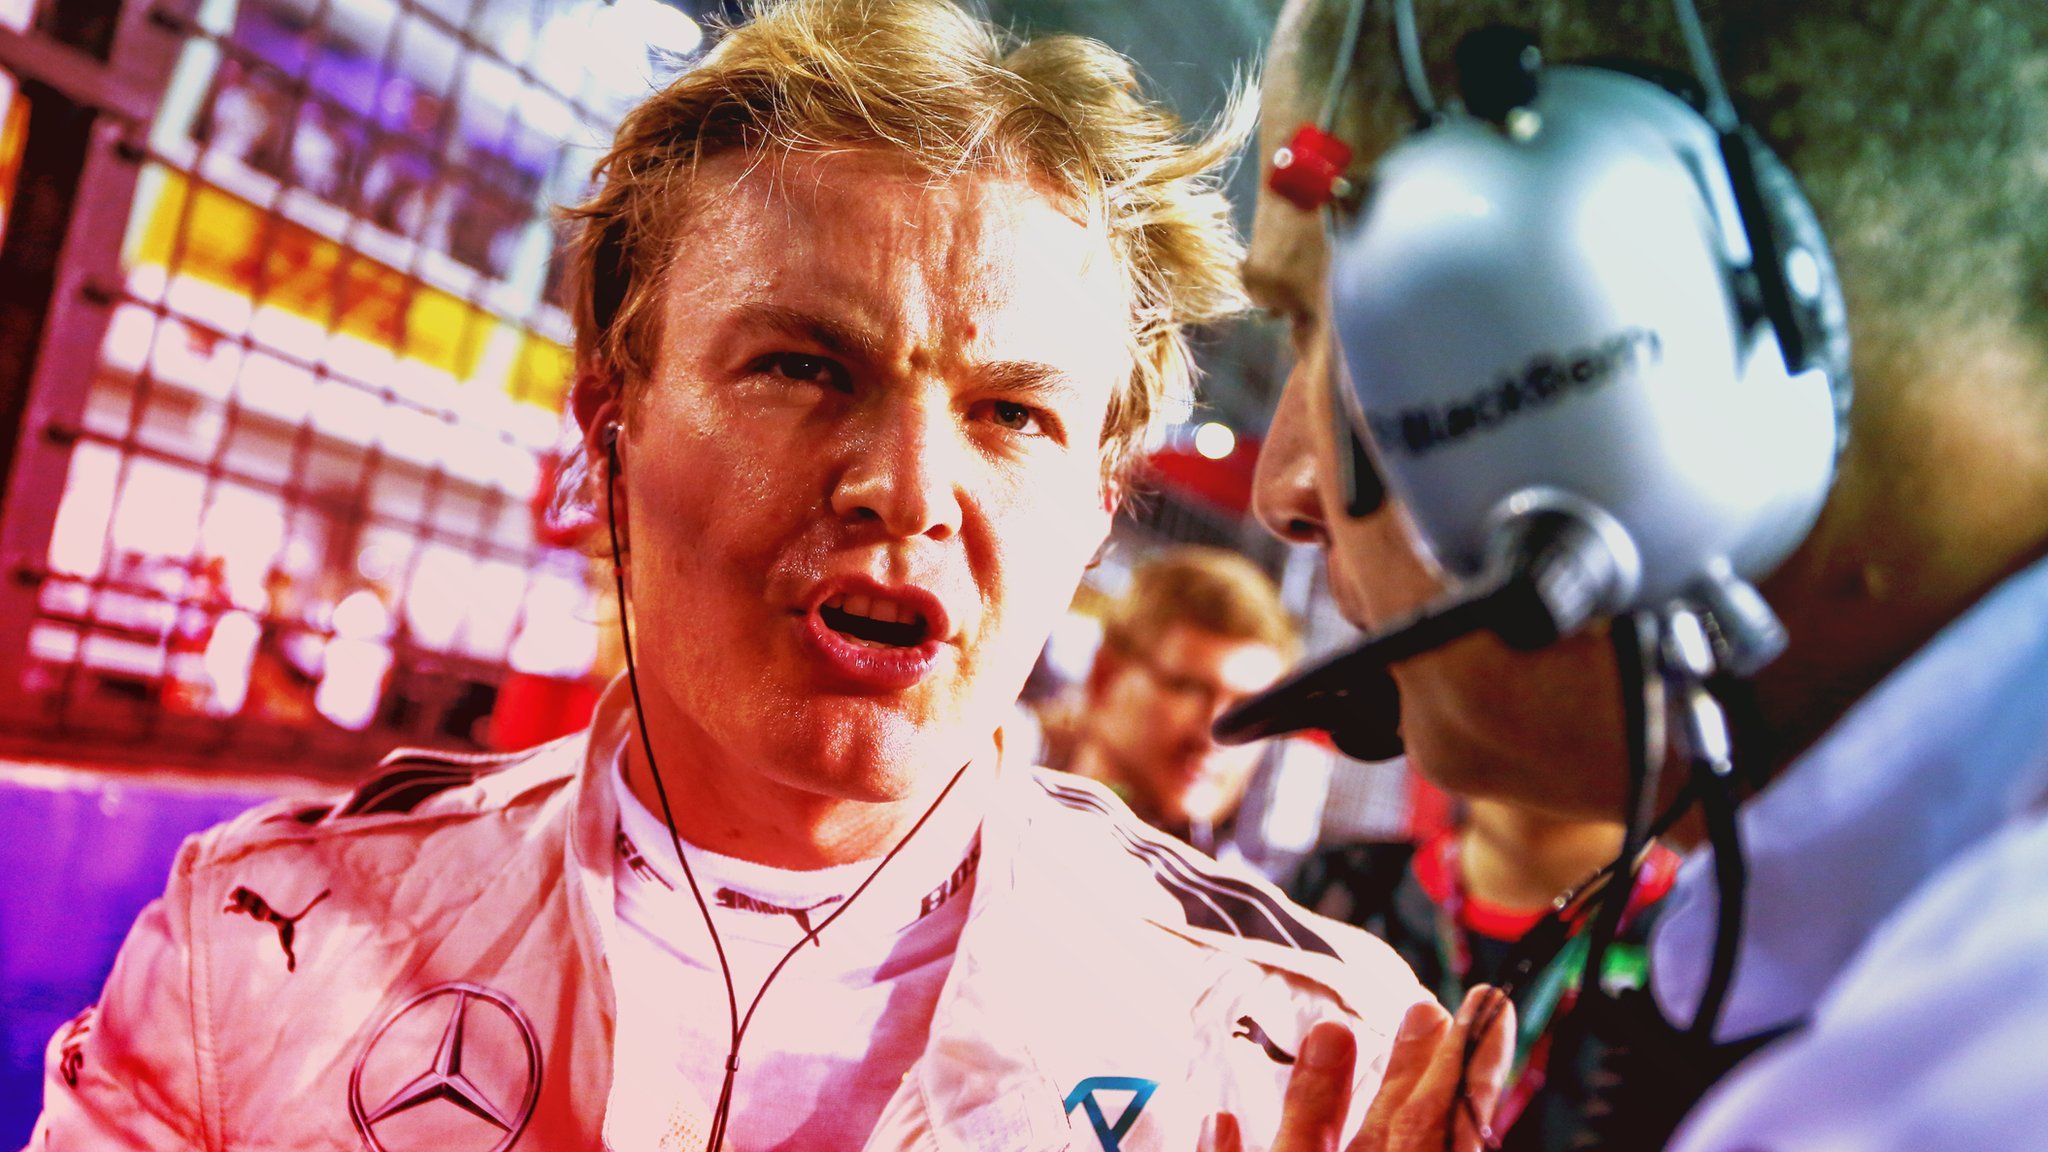 Grumpy Rosberg removes his cap and shows his teeth